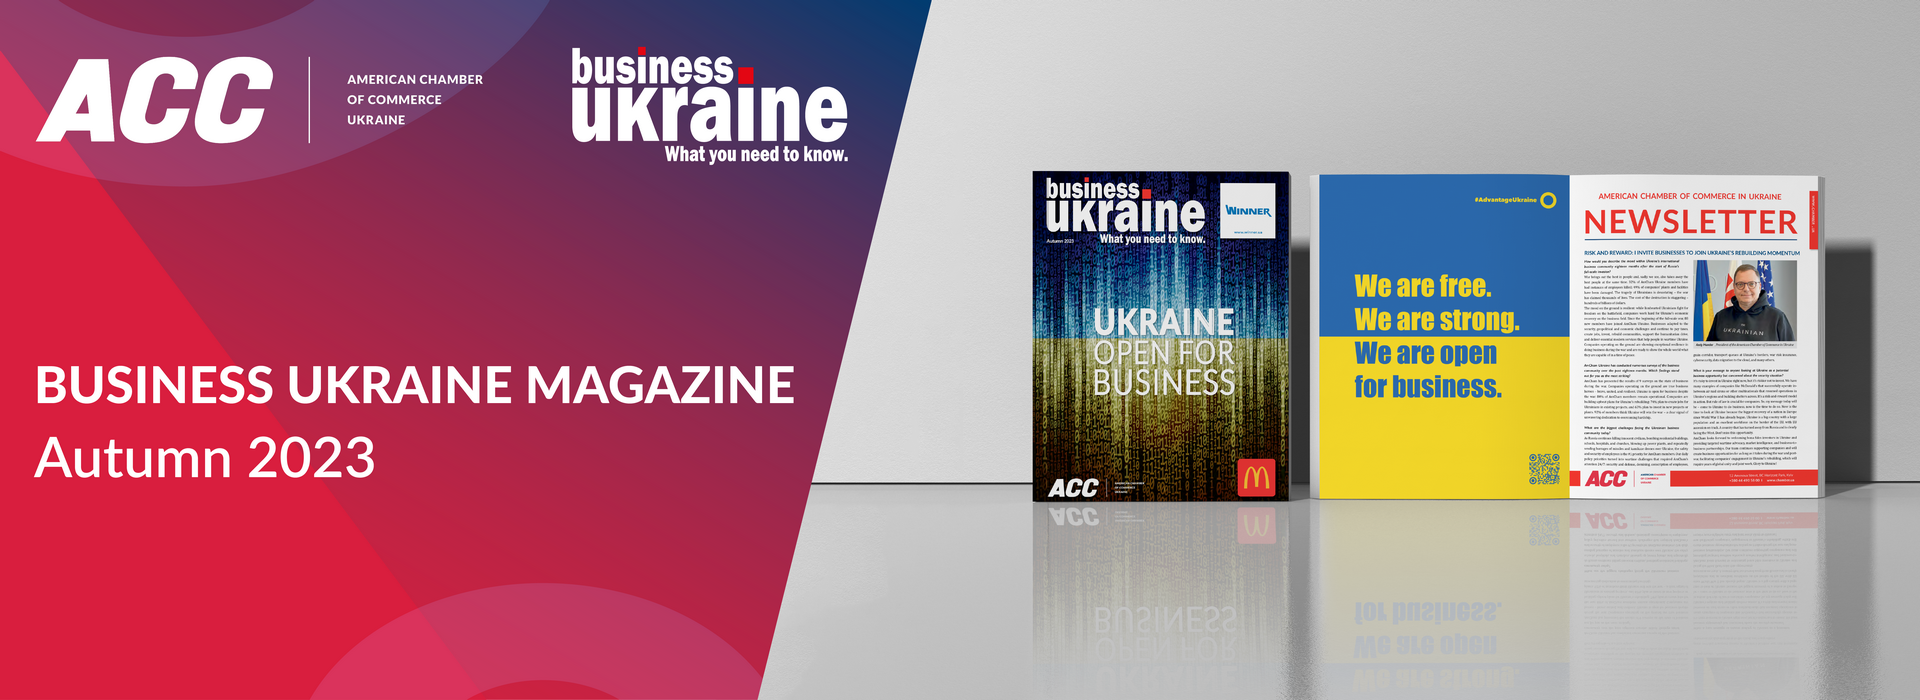 Business Ukraine Magazine: Ukraine Open for Business. Autumn 2023